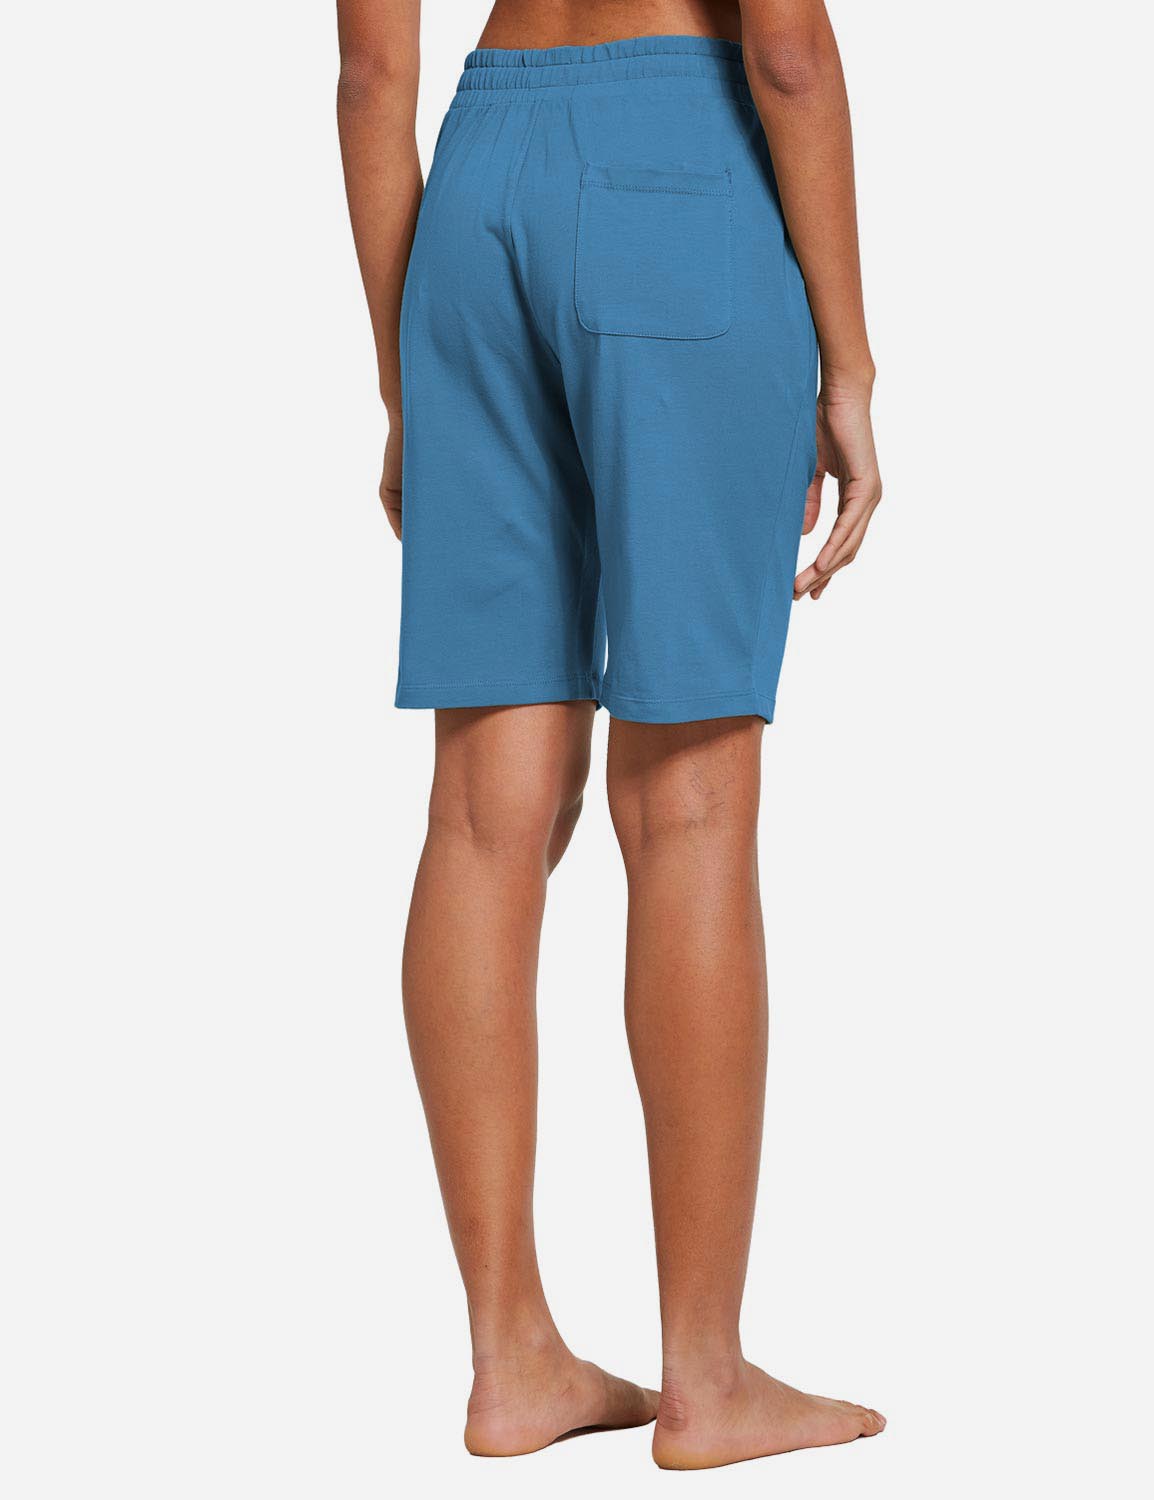 Baleaf Women's Mid-Rise Cotton Pocketed Bermuda Shorts abh104 Copen Blue Back